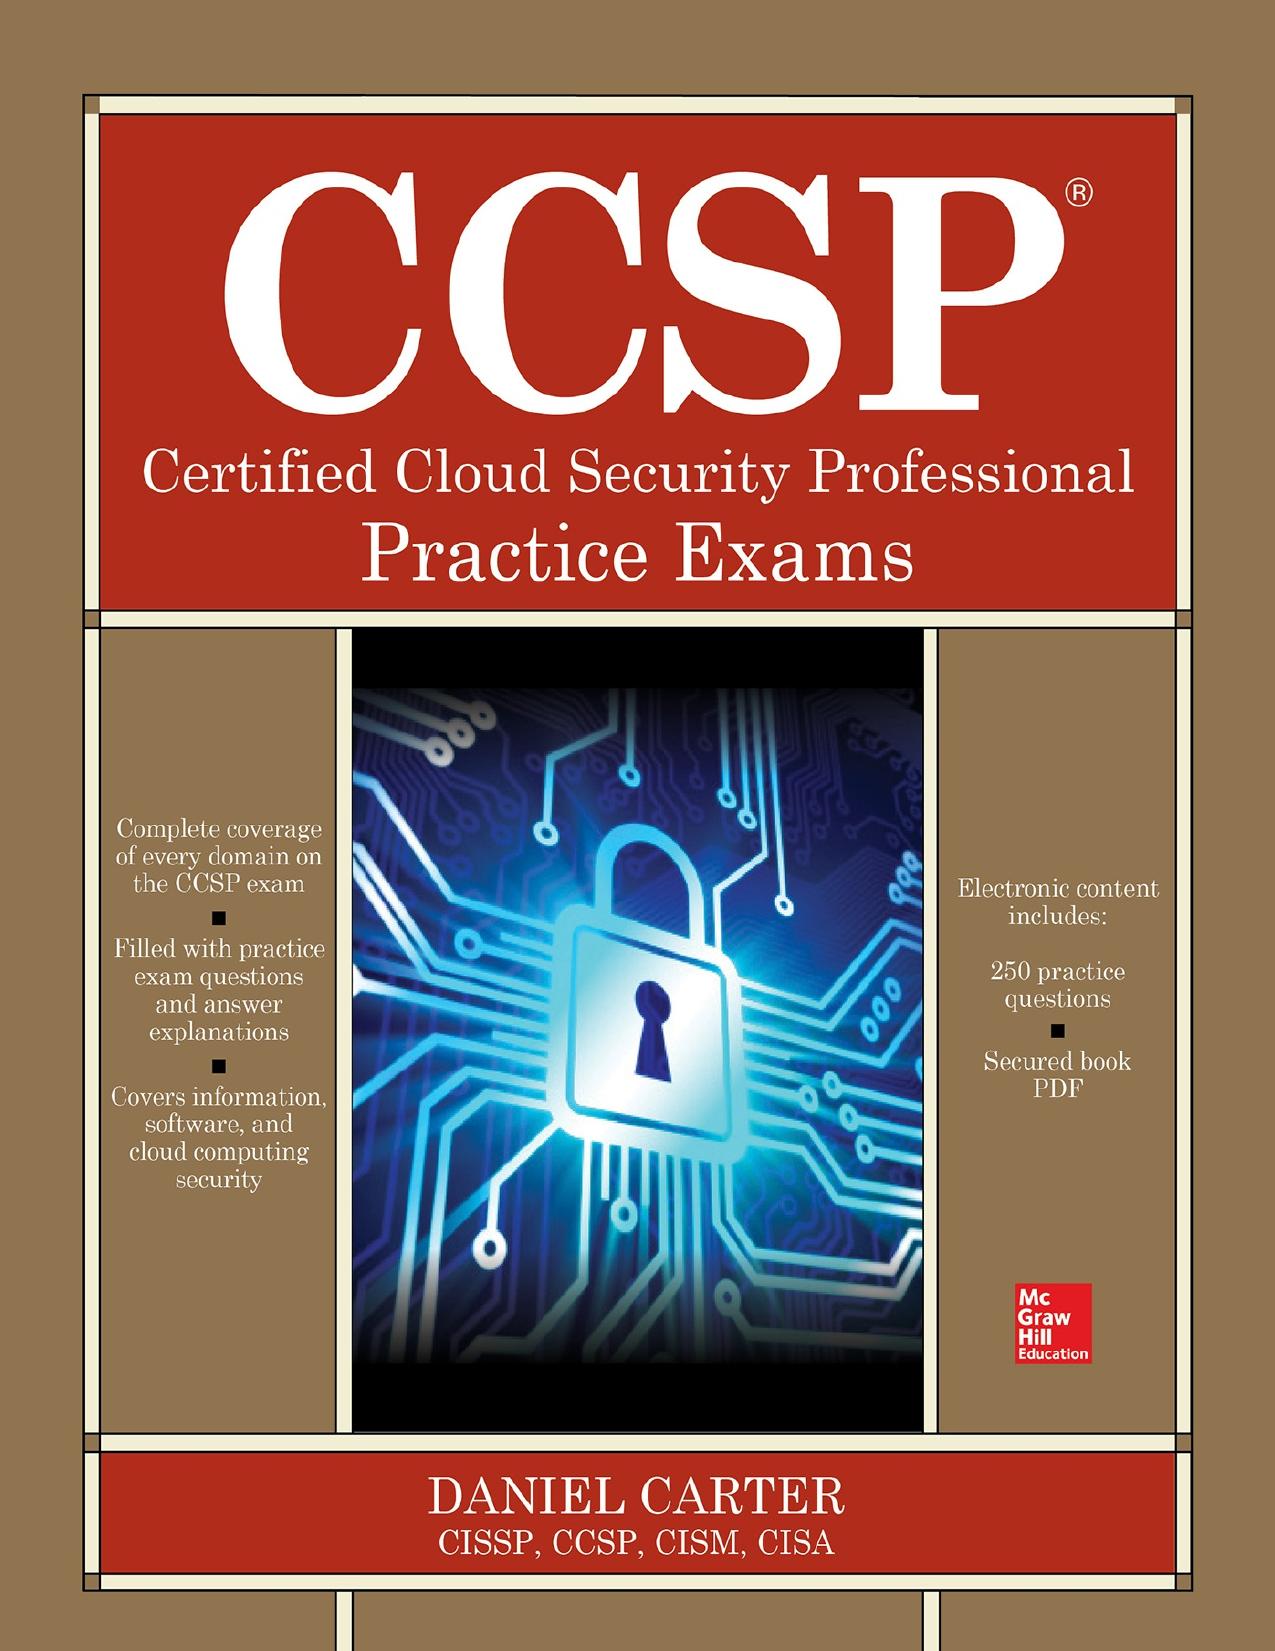 CCSP Certified Cloud Security Professional Practice Exams by Daniel Carter